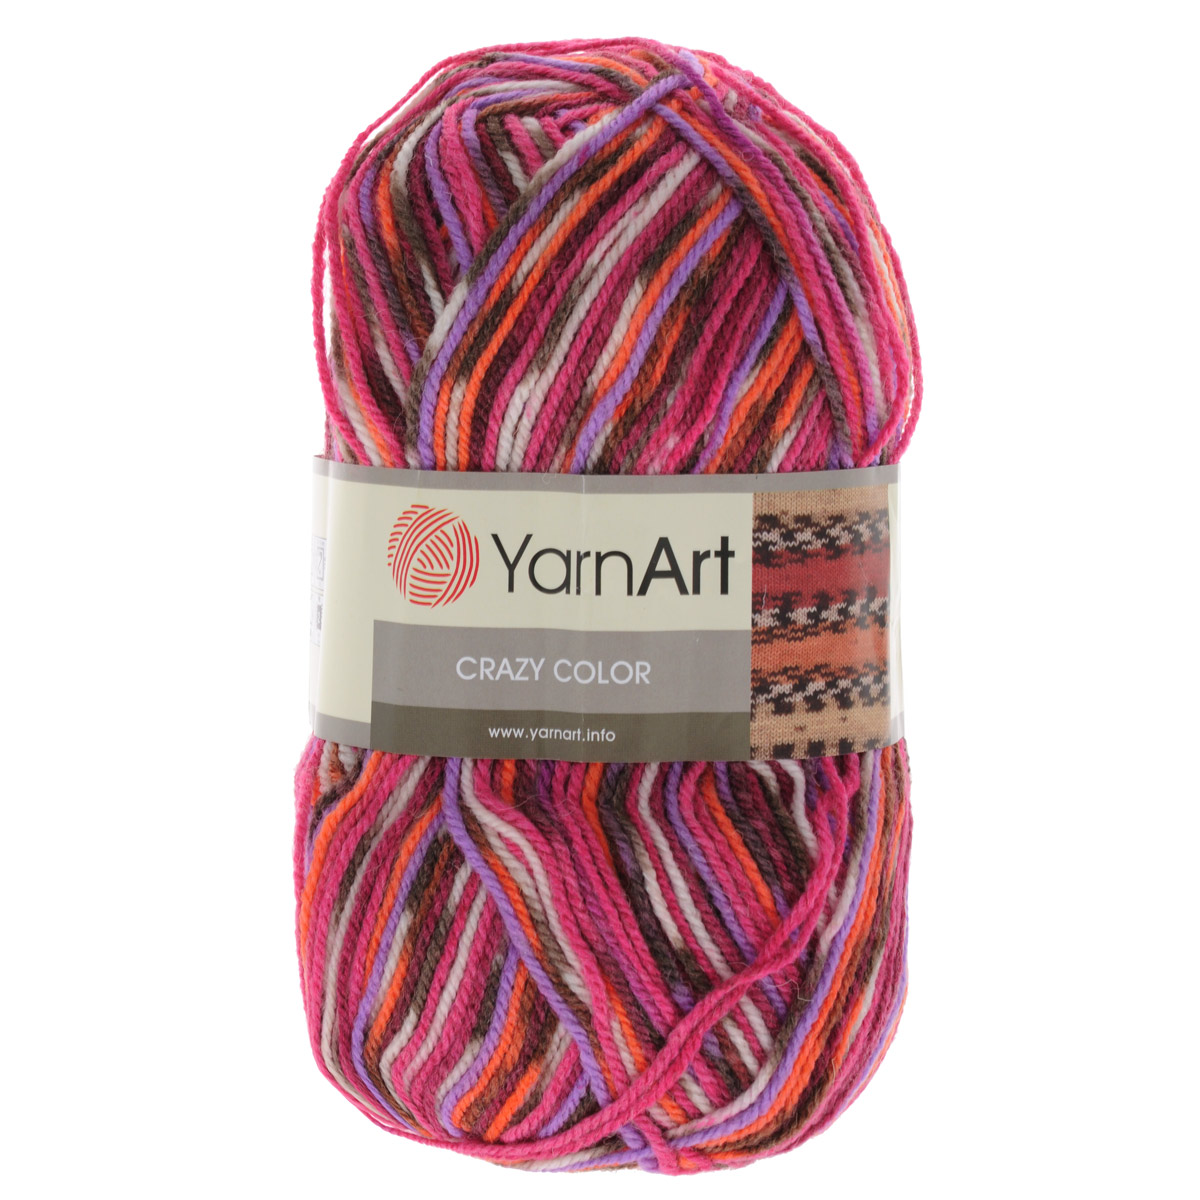    YarnArt Crazy Color, : , ,  (149), 260 , 100 , 5  - YarnArt / Yarn Art372036_149   YarnArt Crazy Color     .          .  ,  , ,  ,  ,     .   ,      .   ,  .        .        , ,   .  YarnArt Crazy Color -             .     ,  .     3,5 . : 25% , 75% .